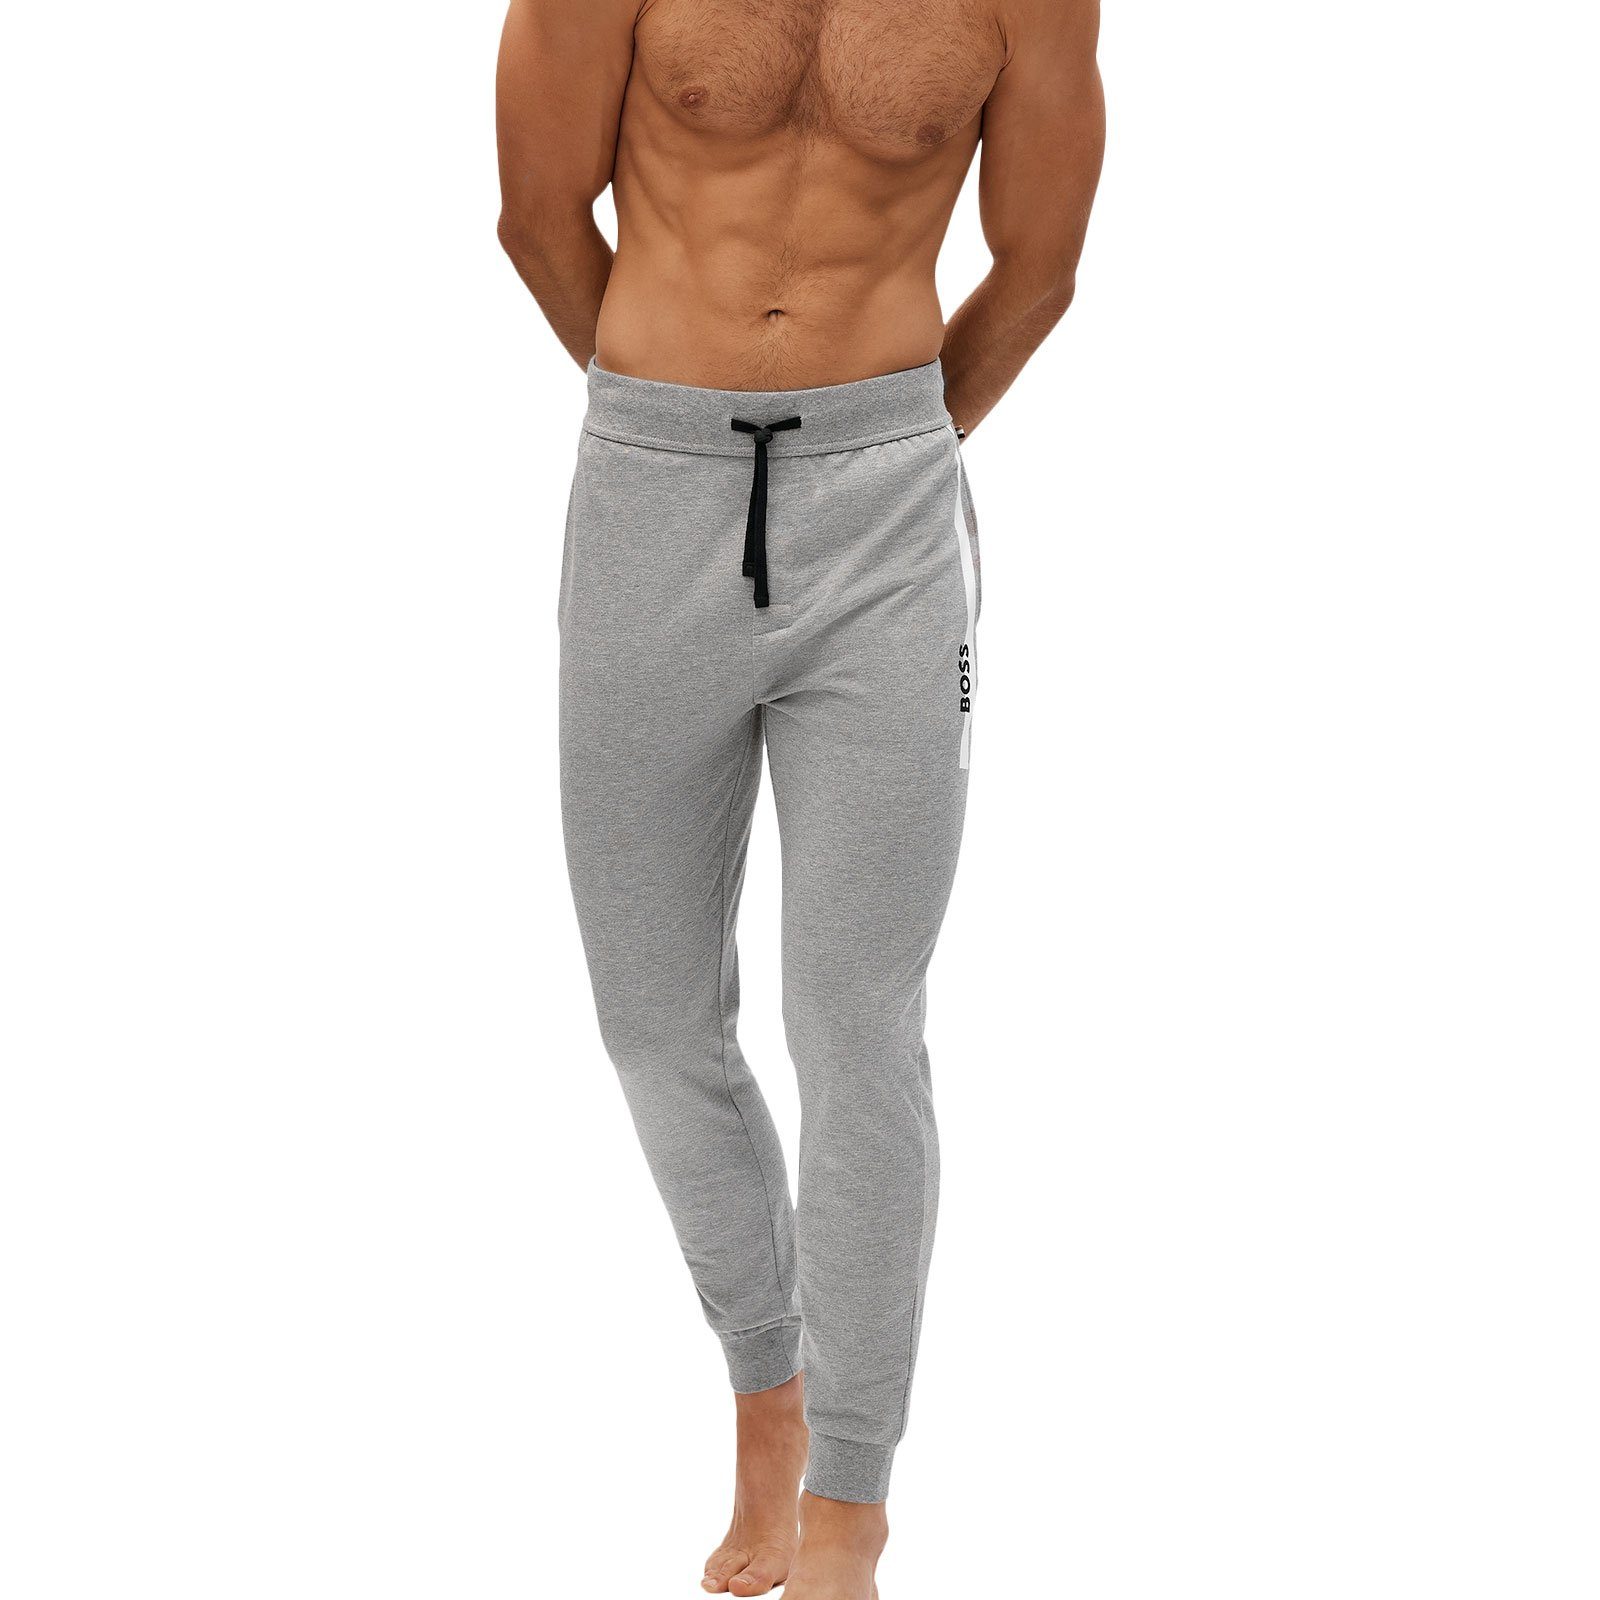 Bundhöhe BOSS Authentic grey Pants medium 033 mit mittlerer Jogginghose